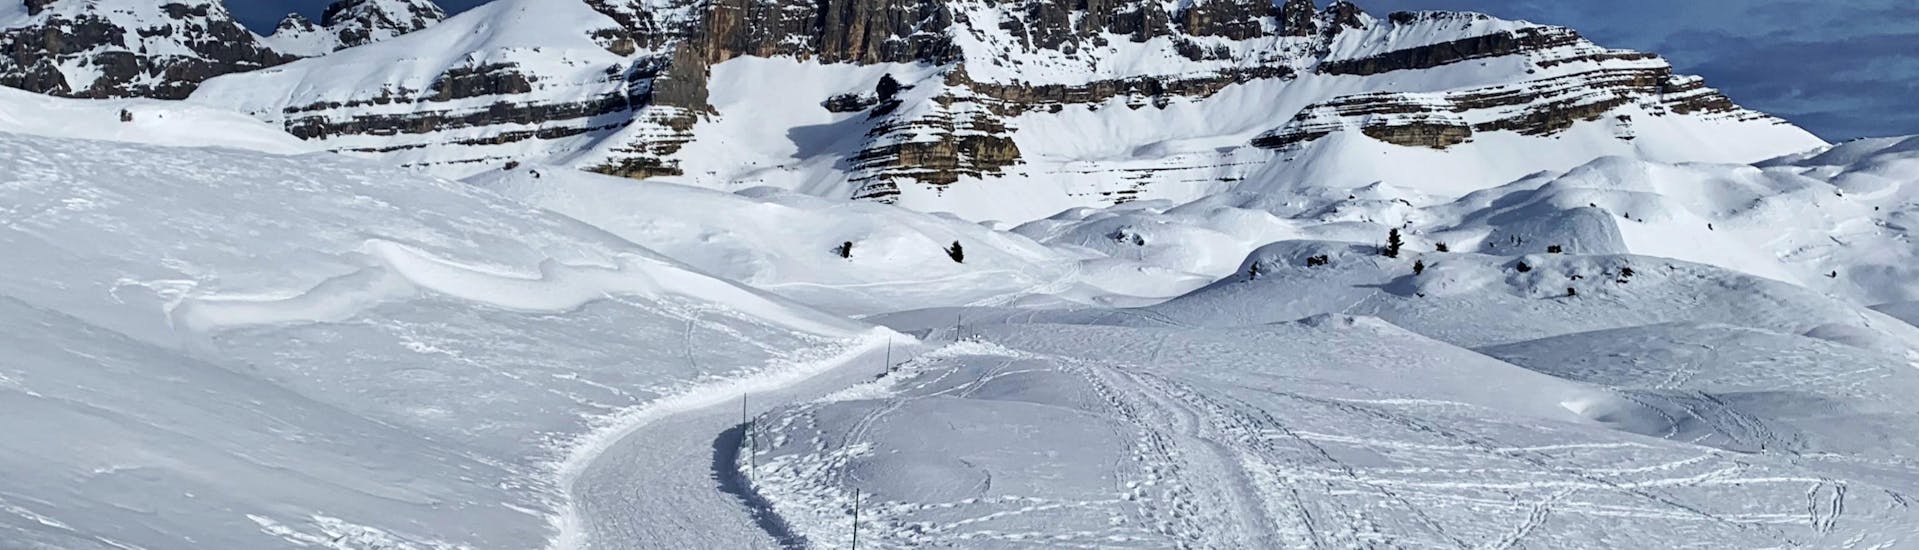 Picture of a landscape from the Madonna di Campiglio ski resort.